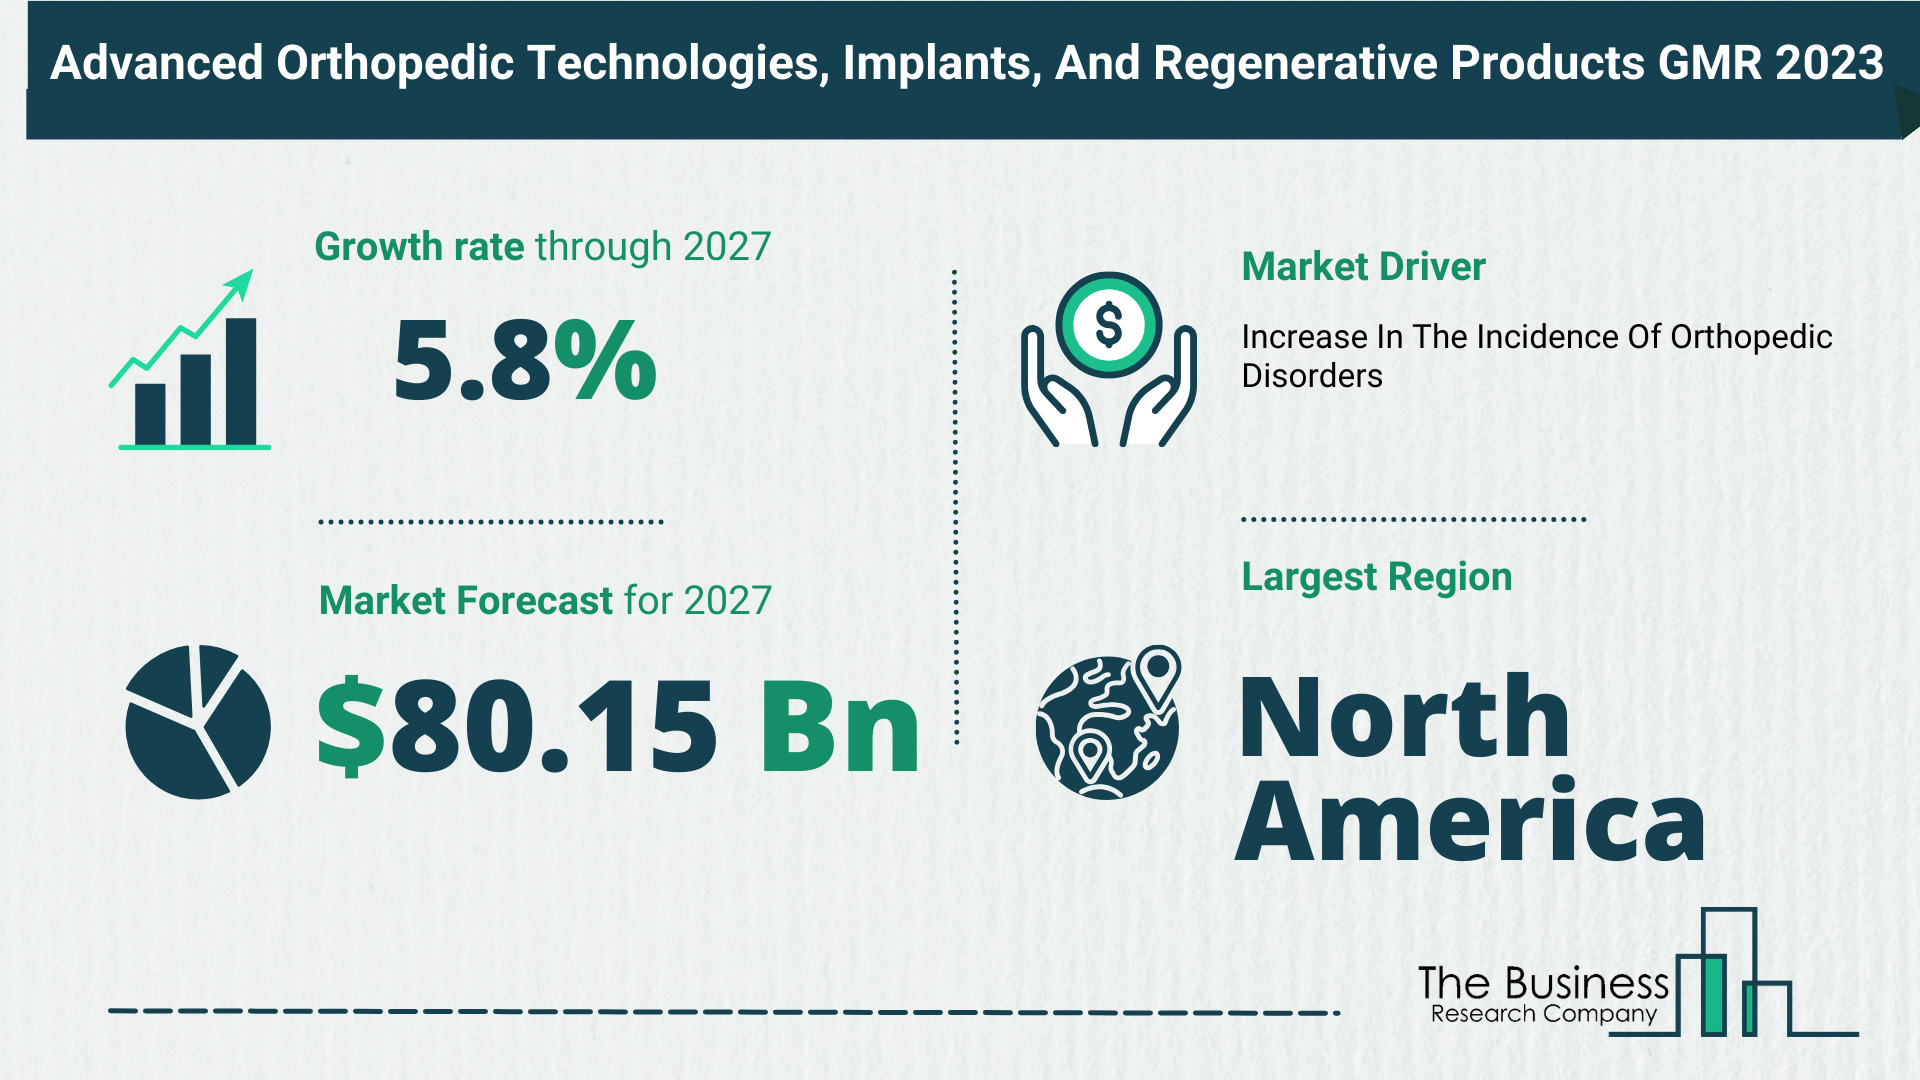 Global Advanced Orthopedic Technologies, Implants, And Regenerative Products Market